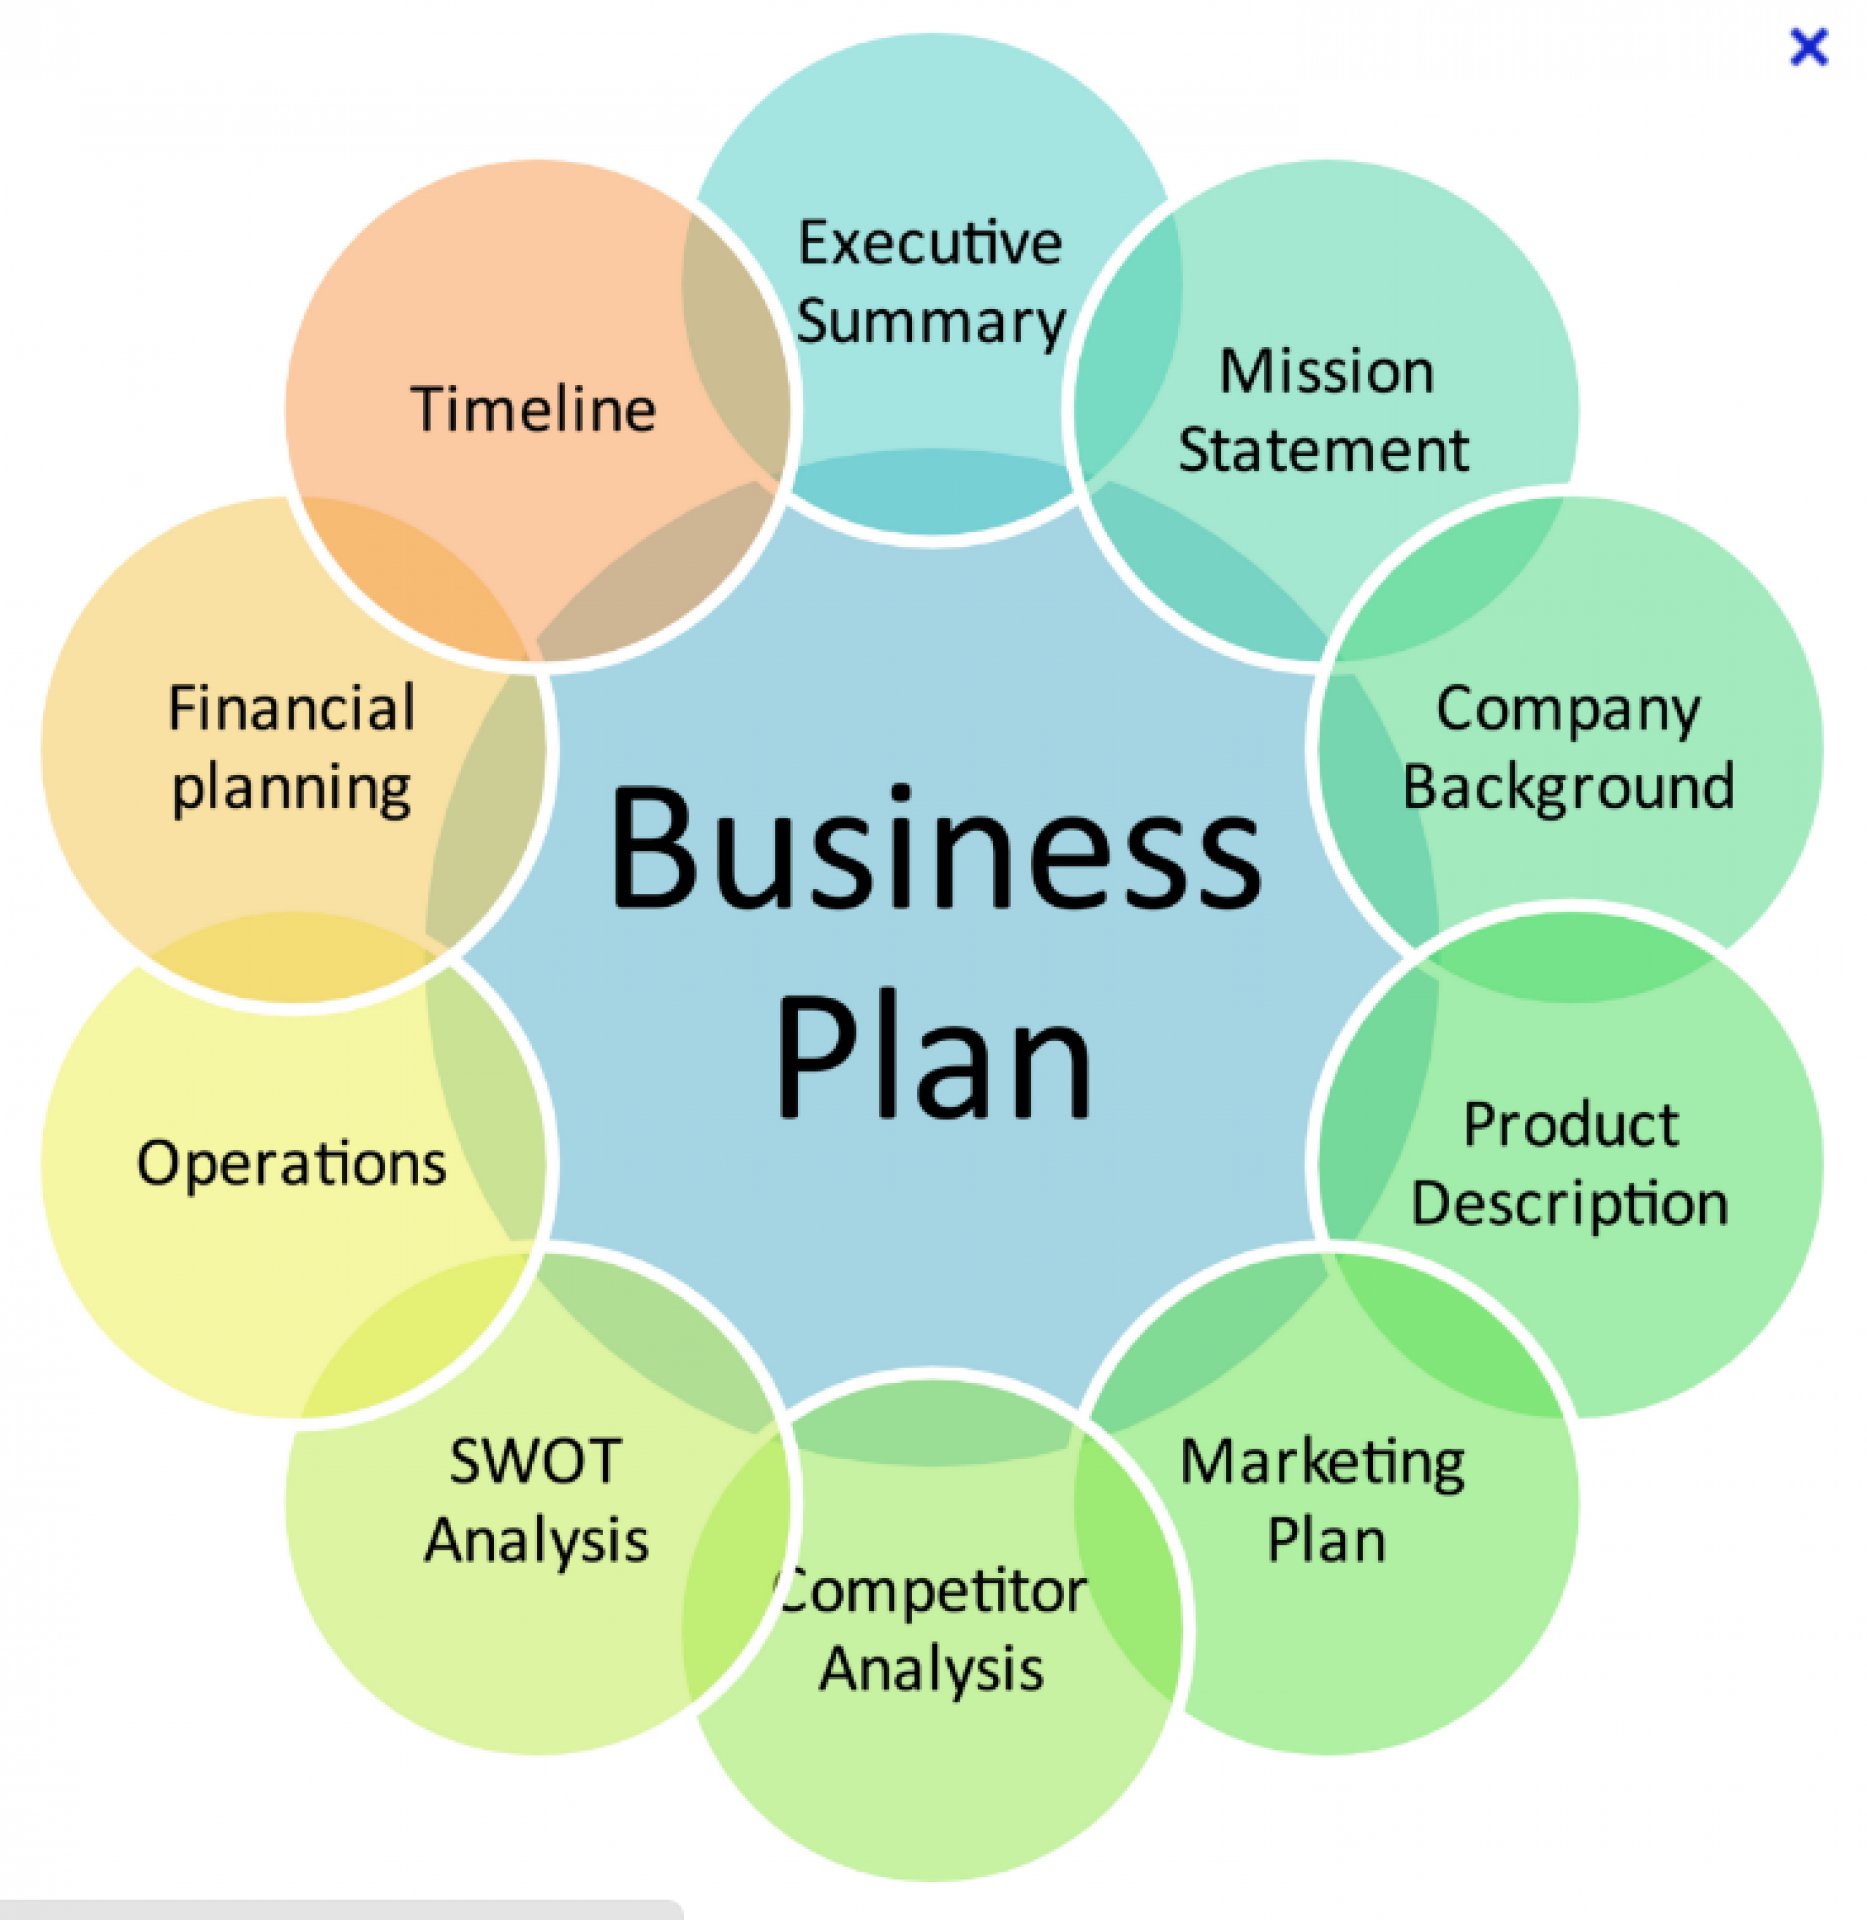 100 startup business plan